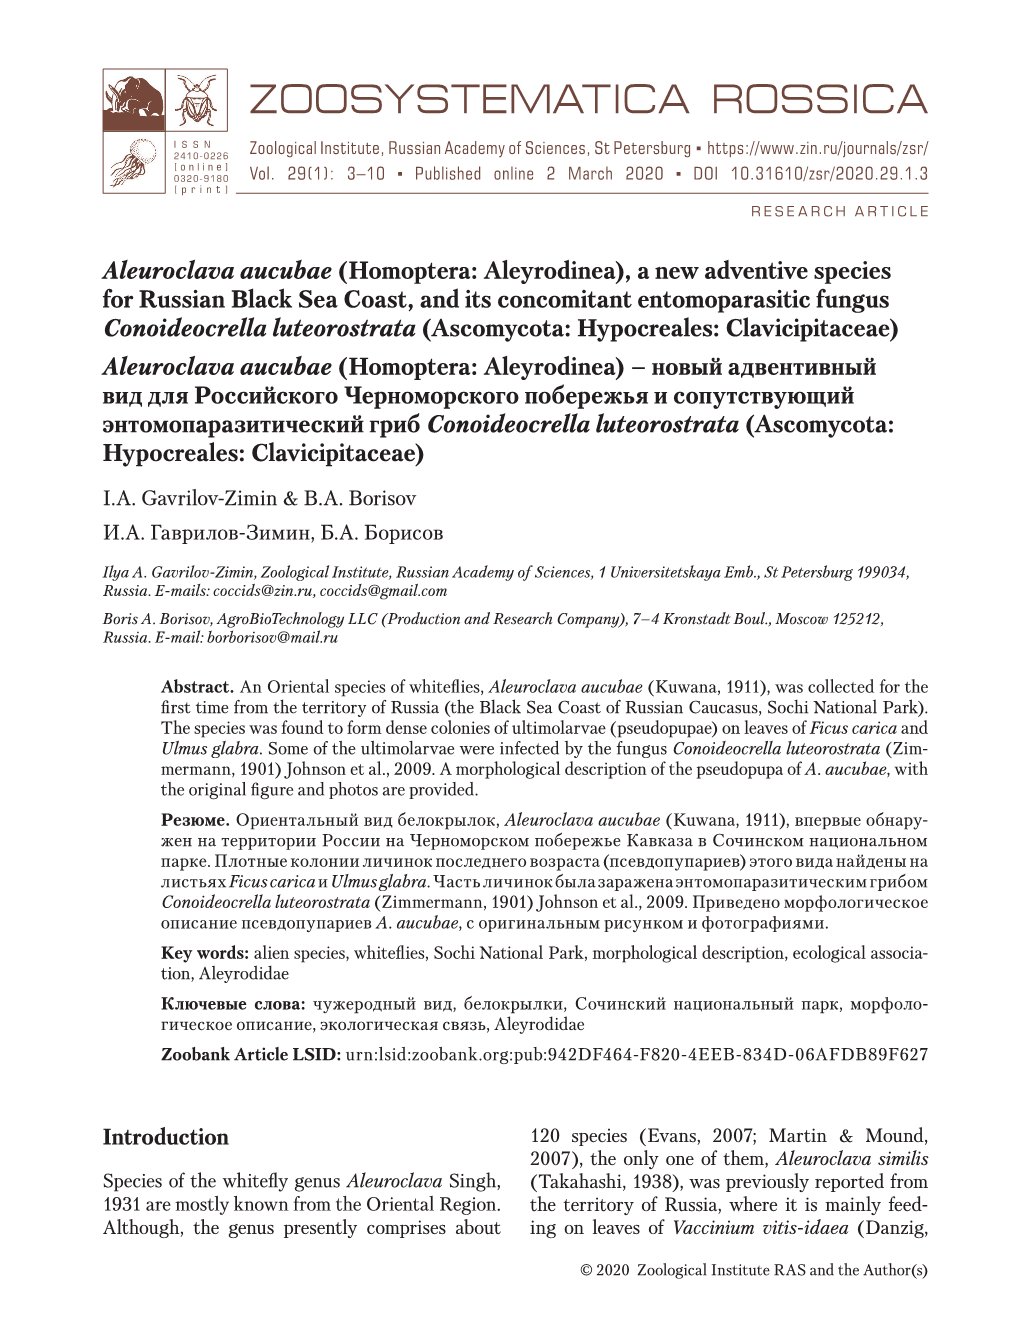 Aleuroclava Aucubae (Homoptera: Aleyrodinea), a New Adventive